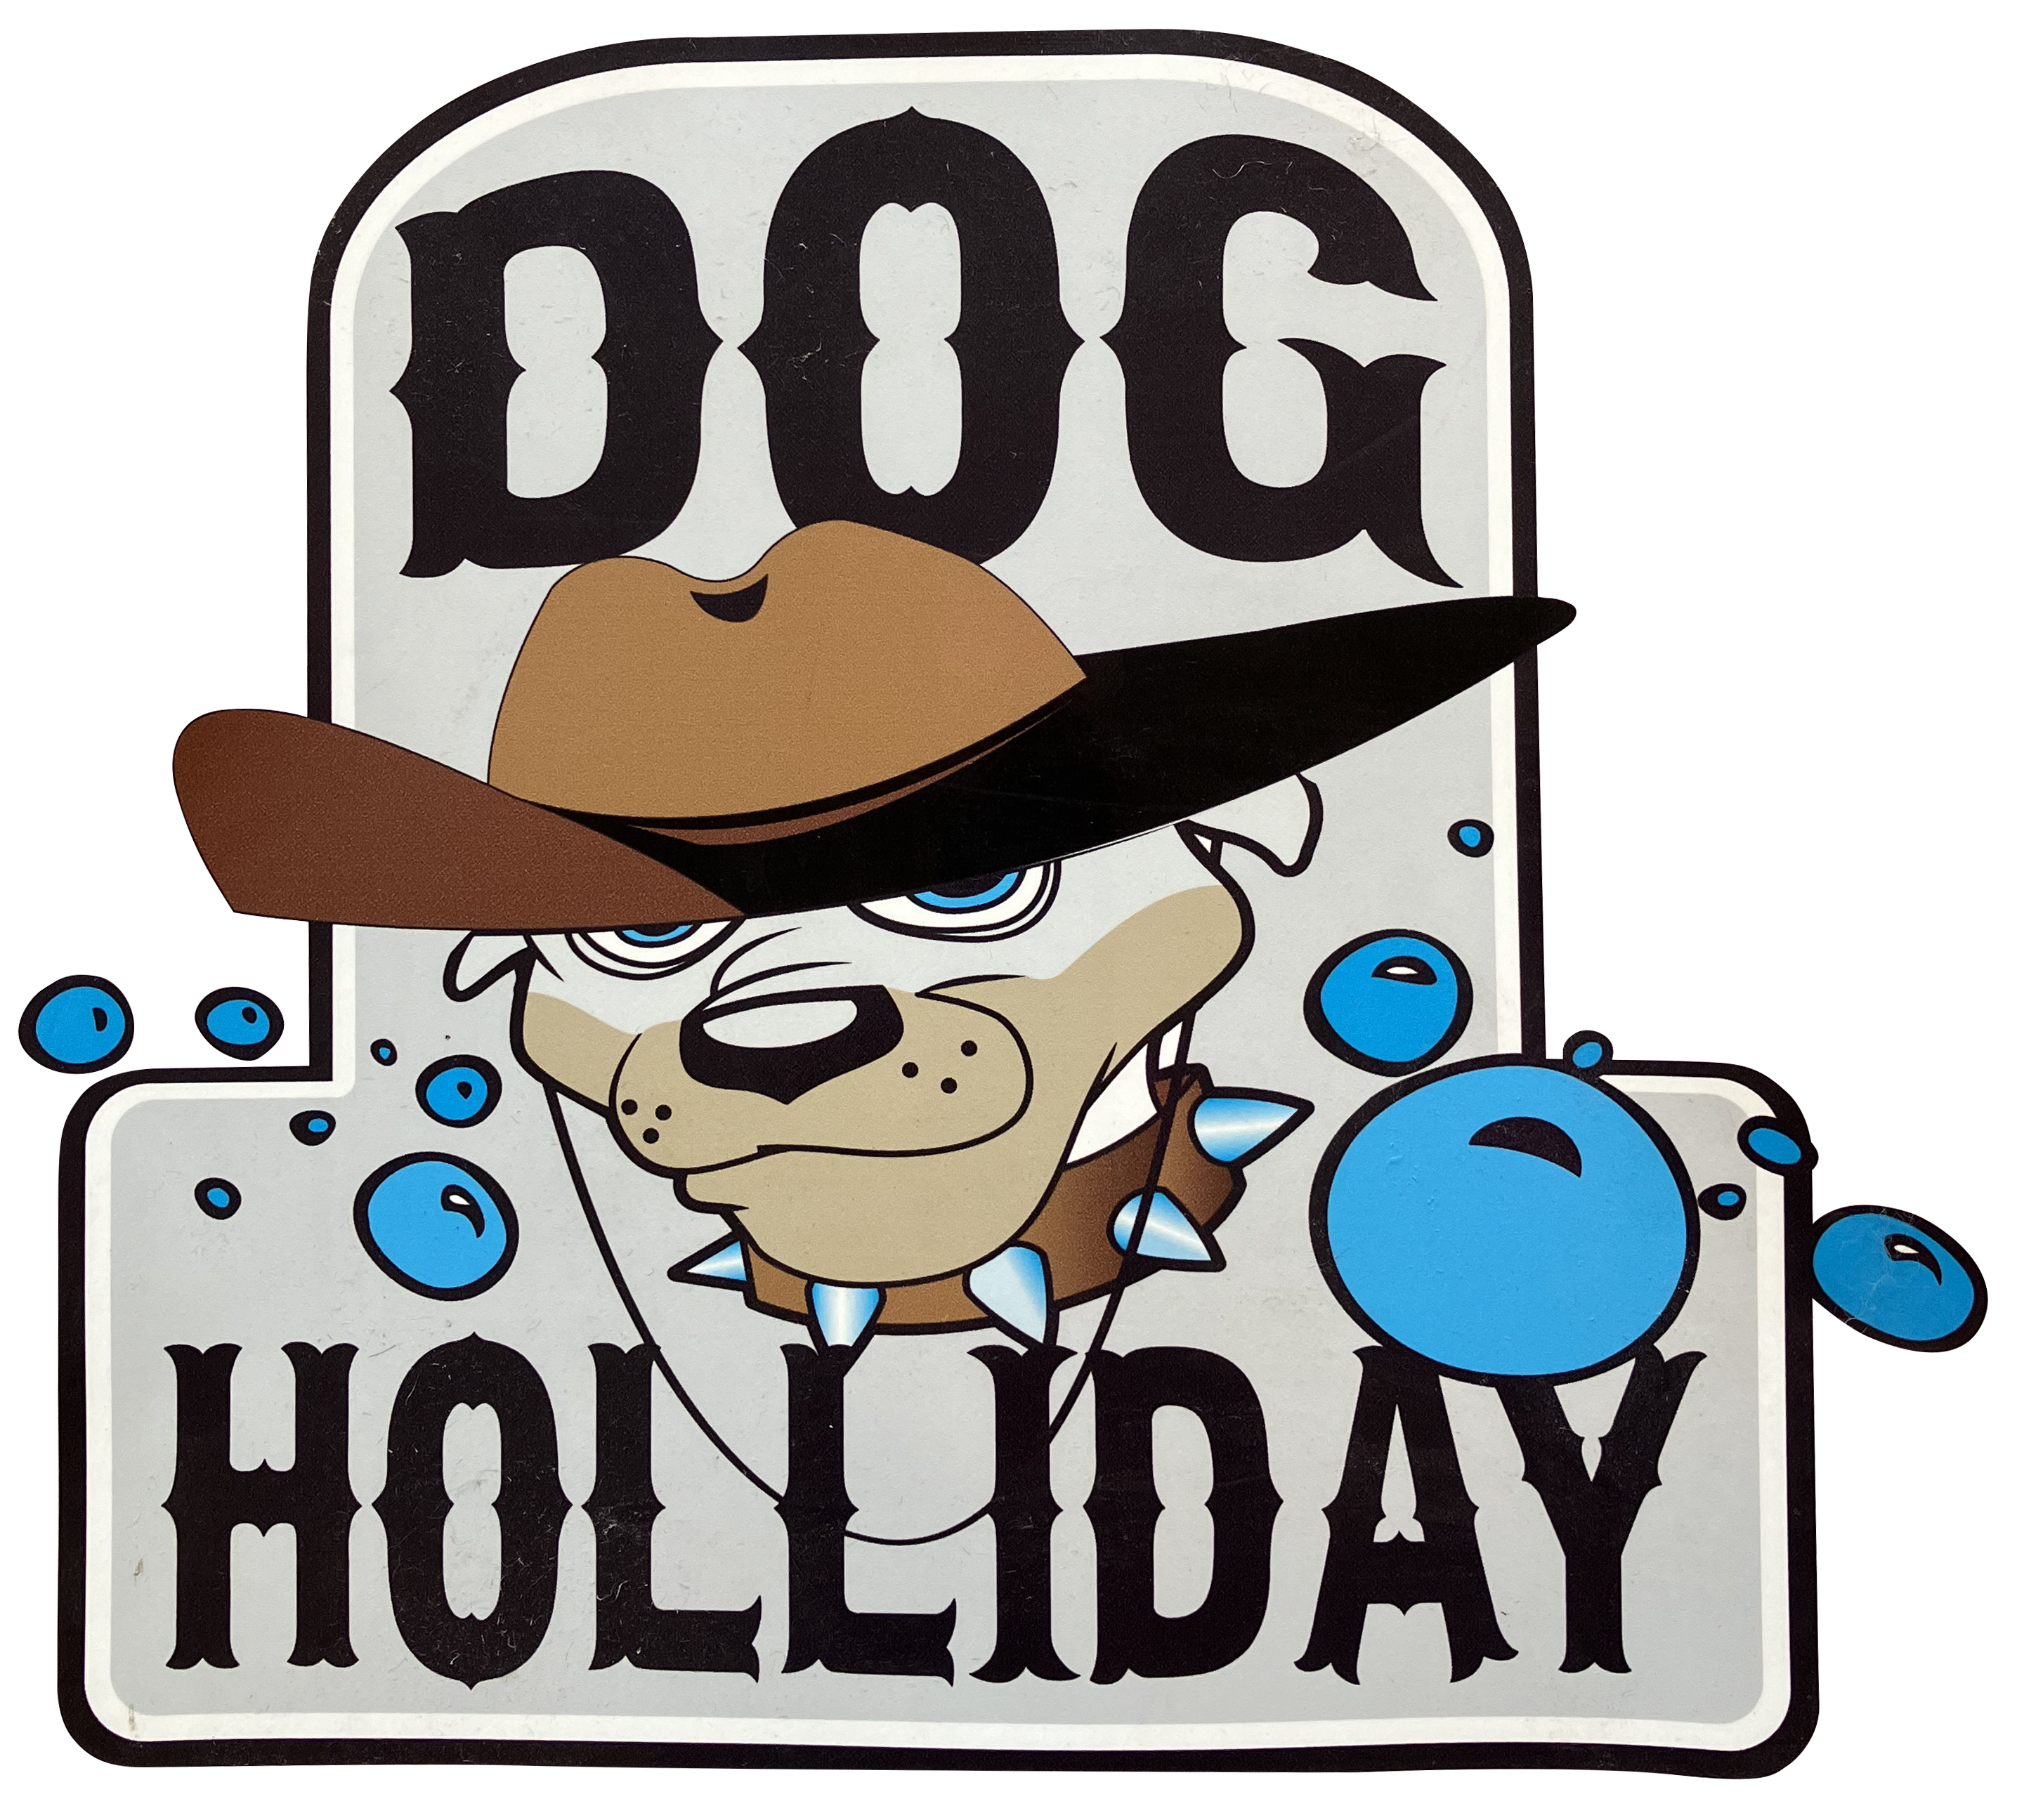 Dog Holliday Mobile Grooming LLC